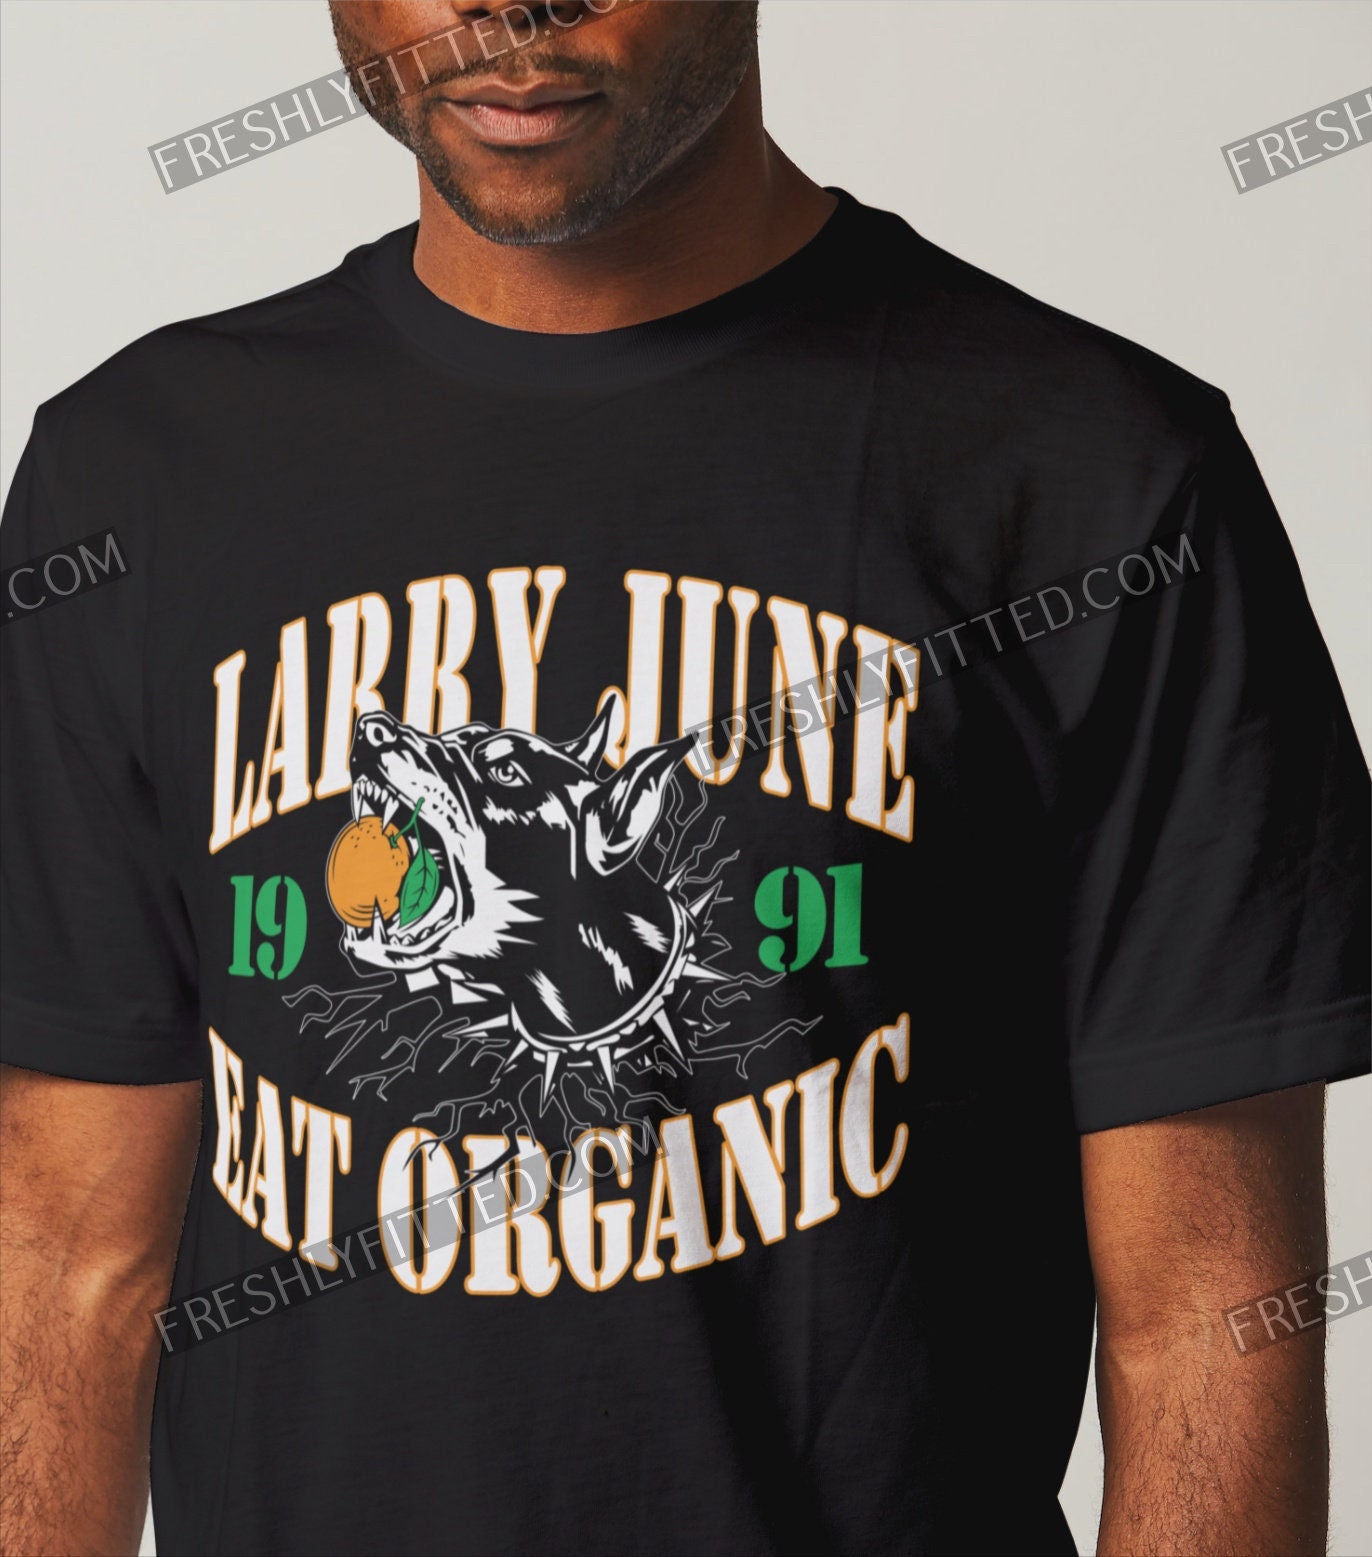 Larry June Eat Organic shirt, Larry June merch, Larry June tour shirt